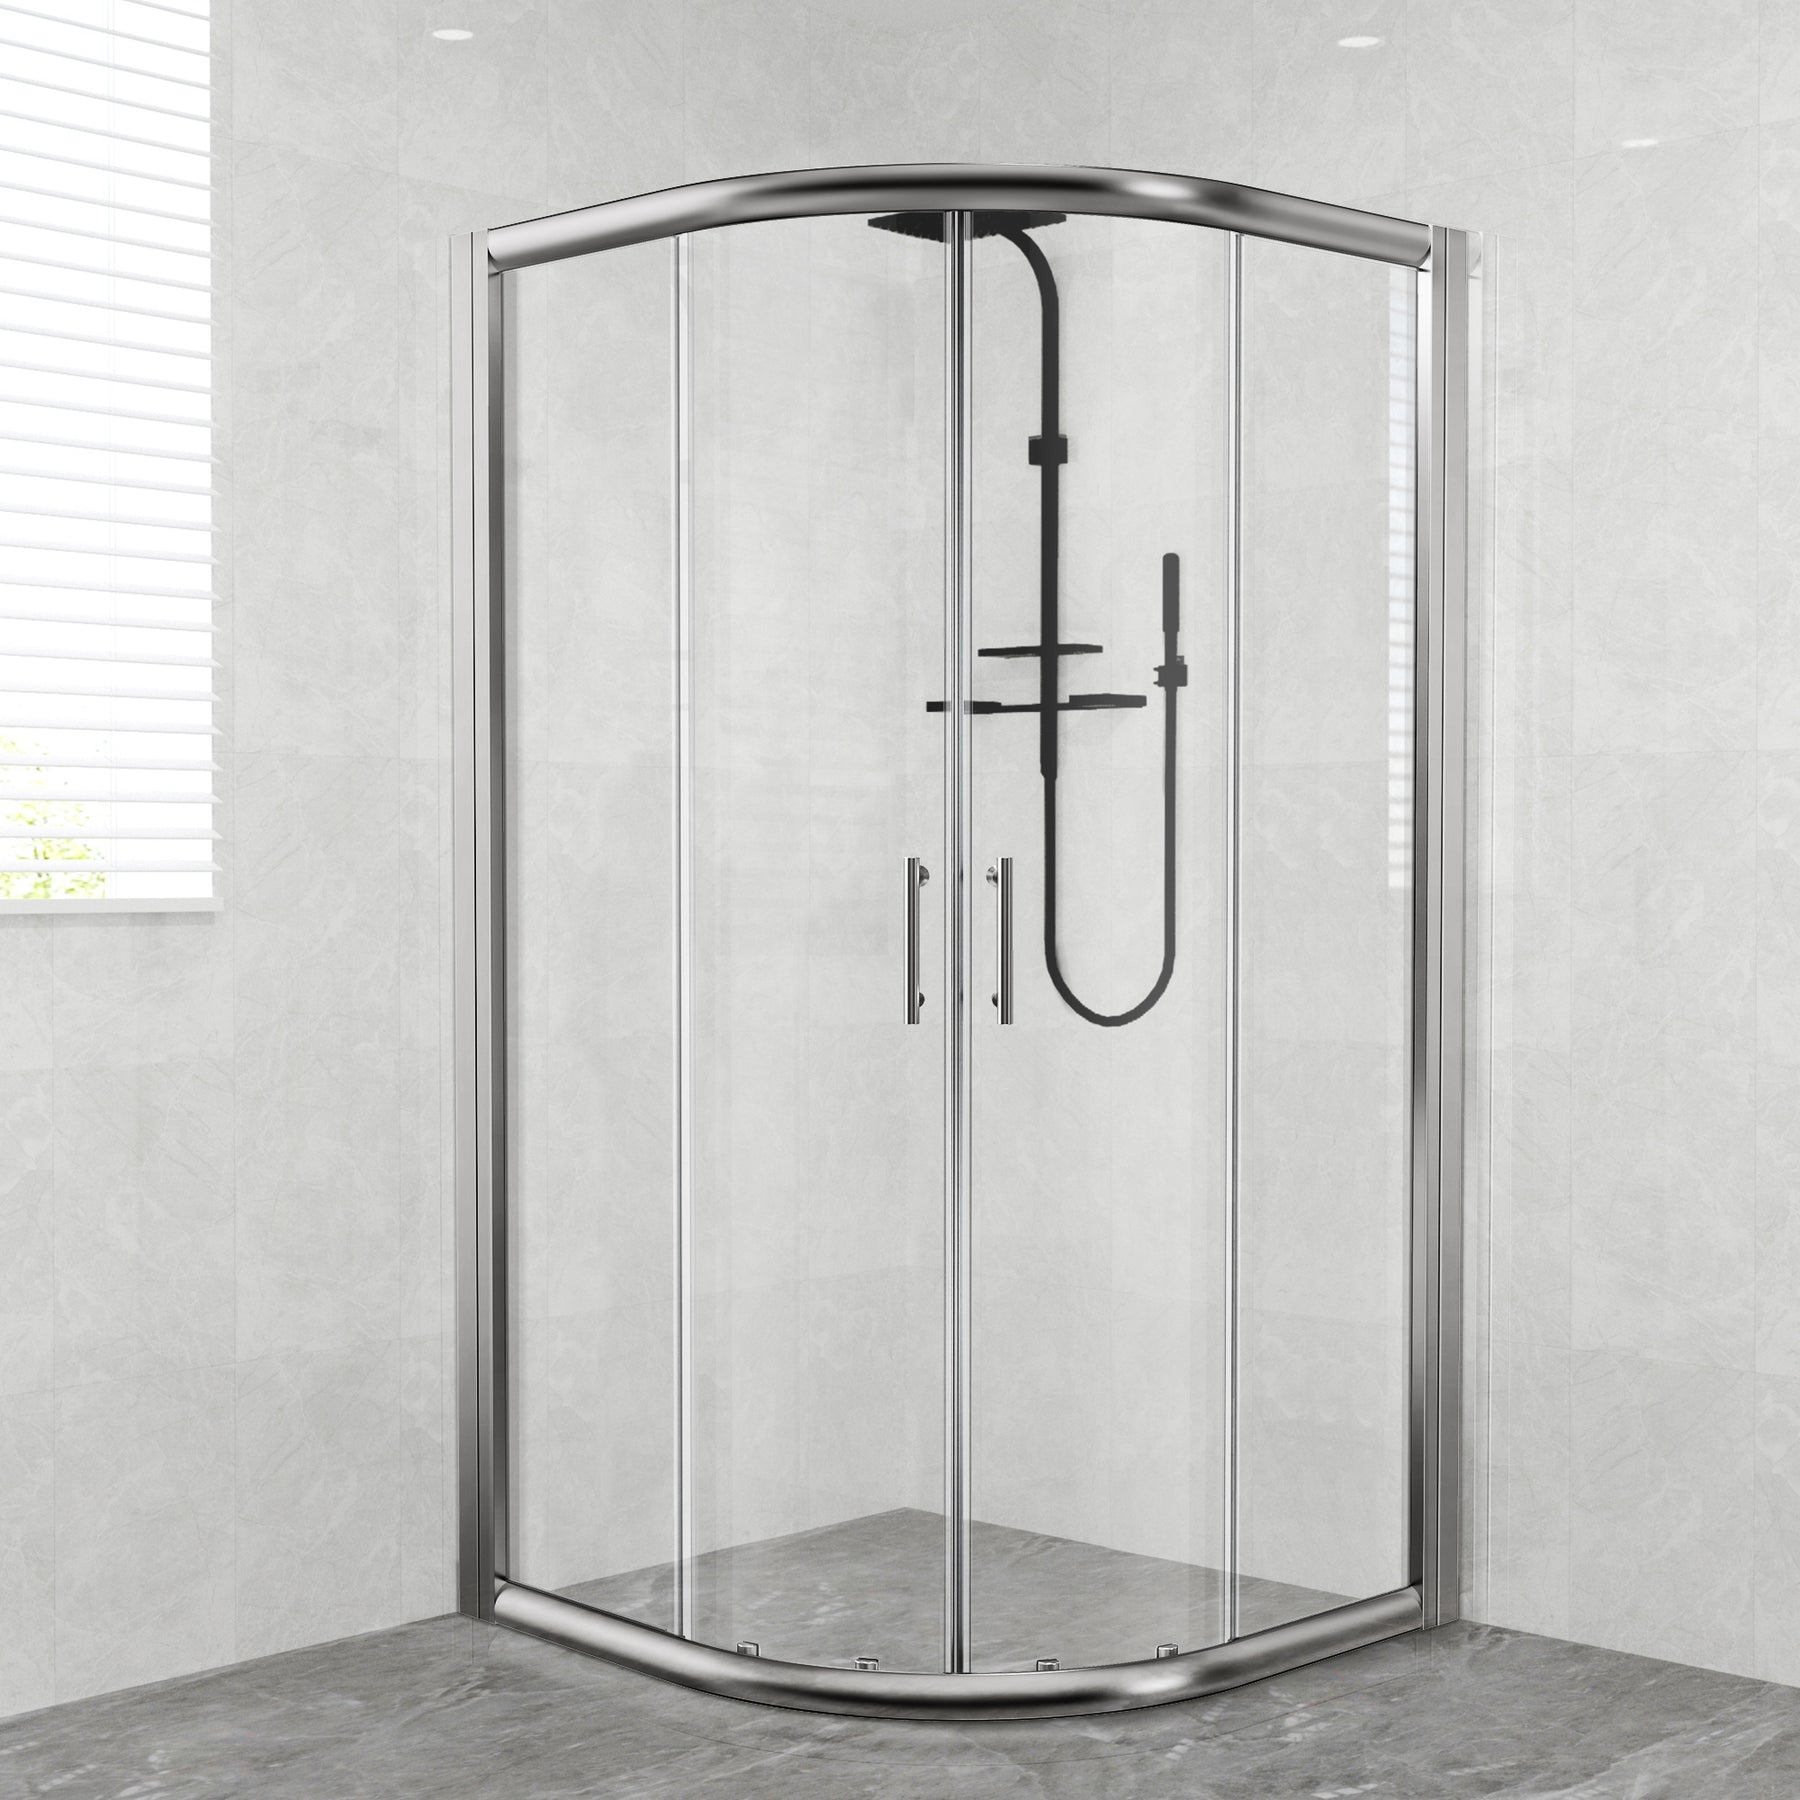 SL4U Round Corner Frameless Shower Enclosure, Double Sliding Shower Door, 38"D x 38"W x 72"H